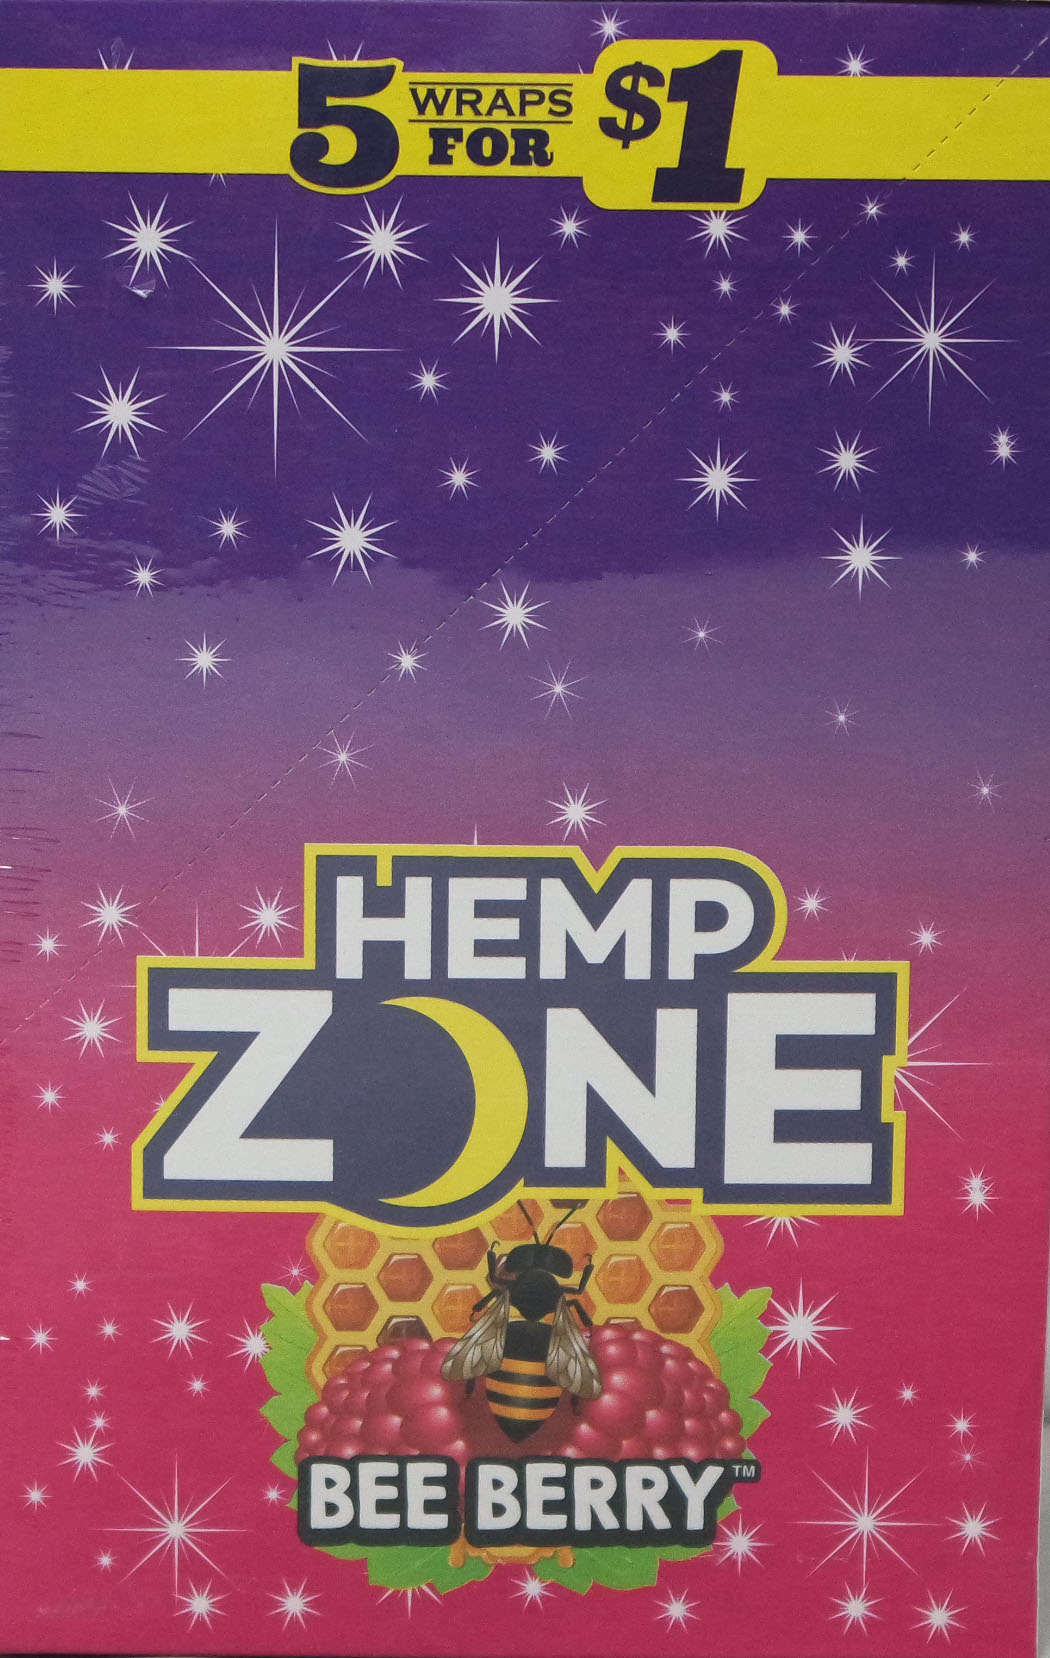 Hemp zone bee bry wraps 5/$1 15/5pk